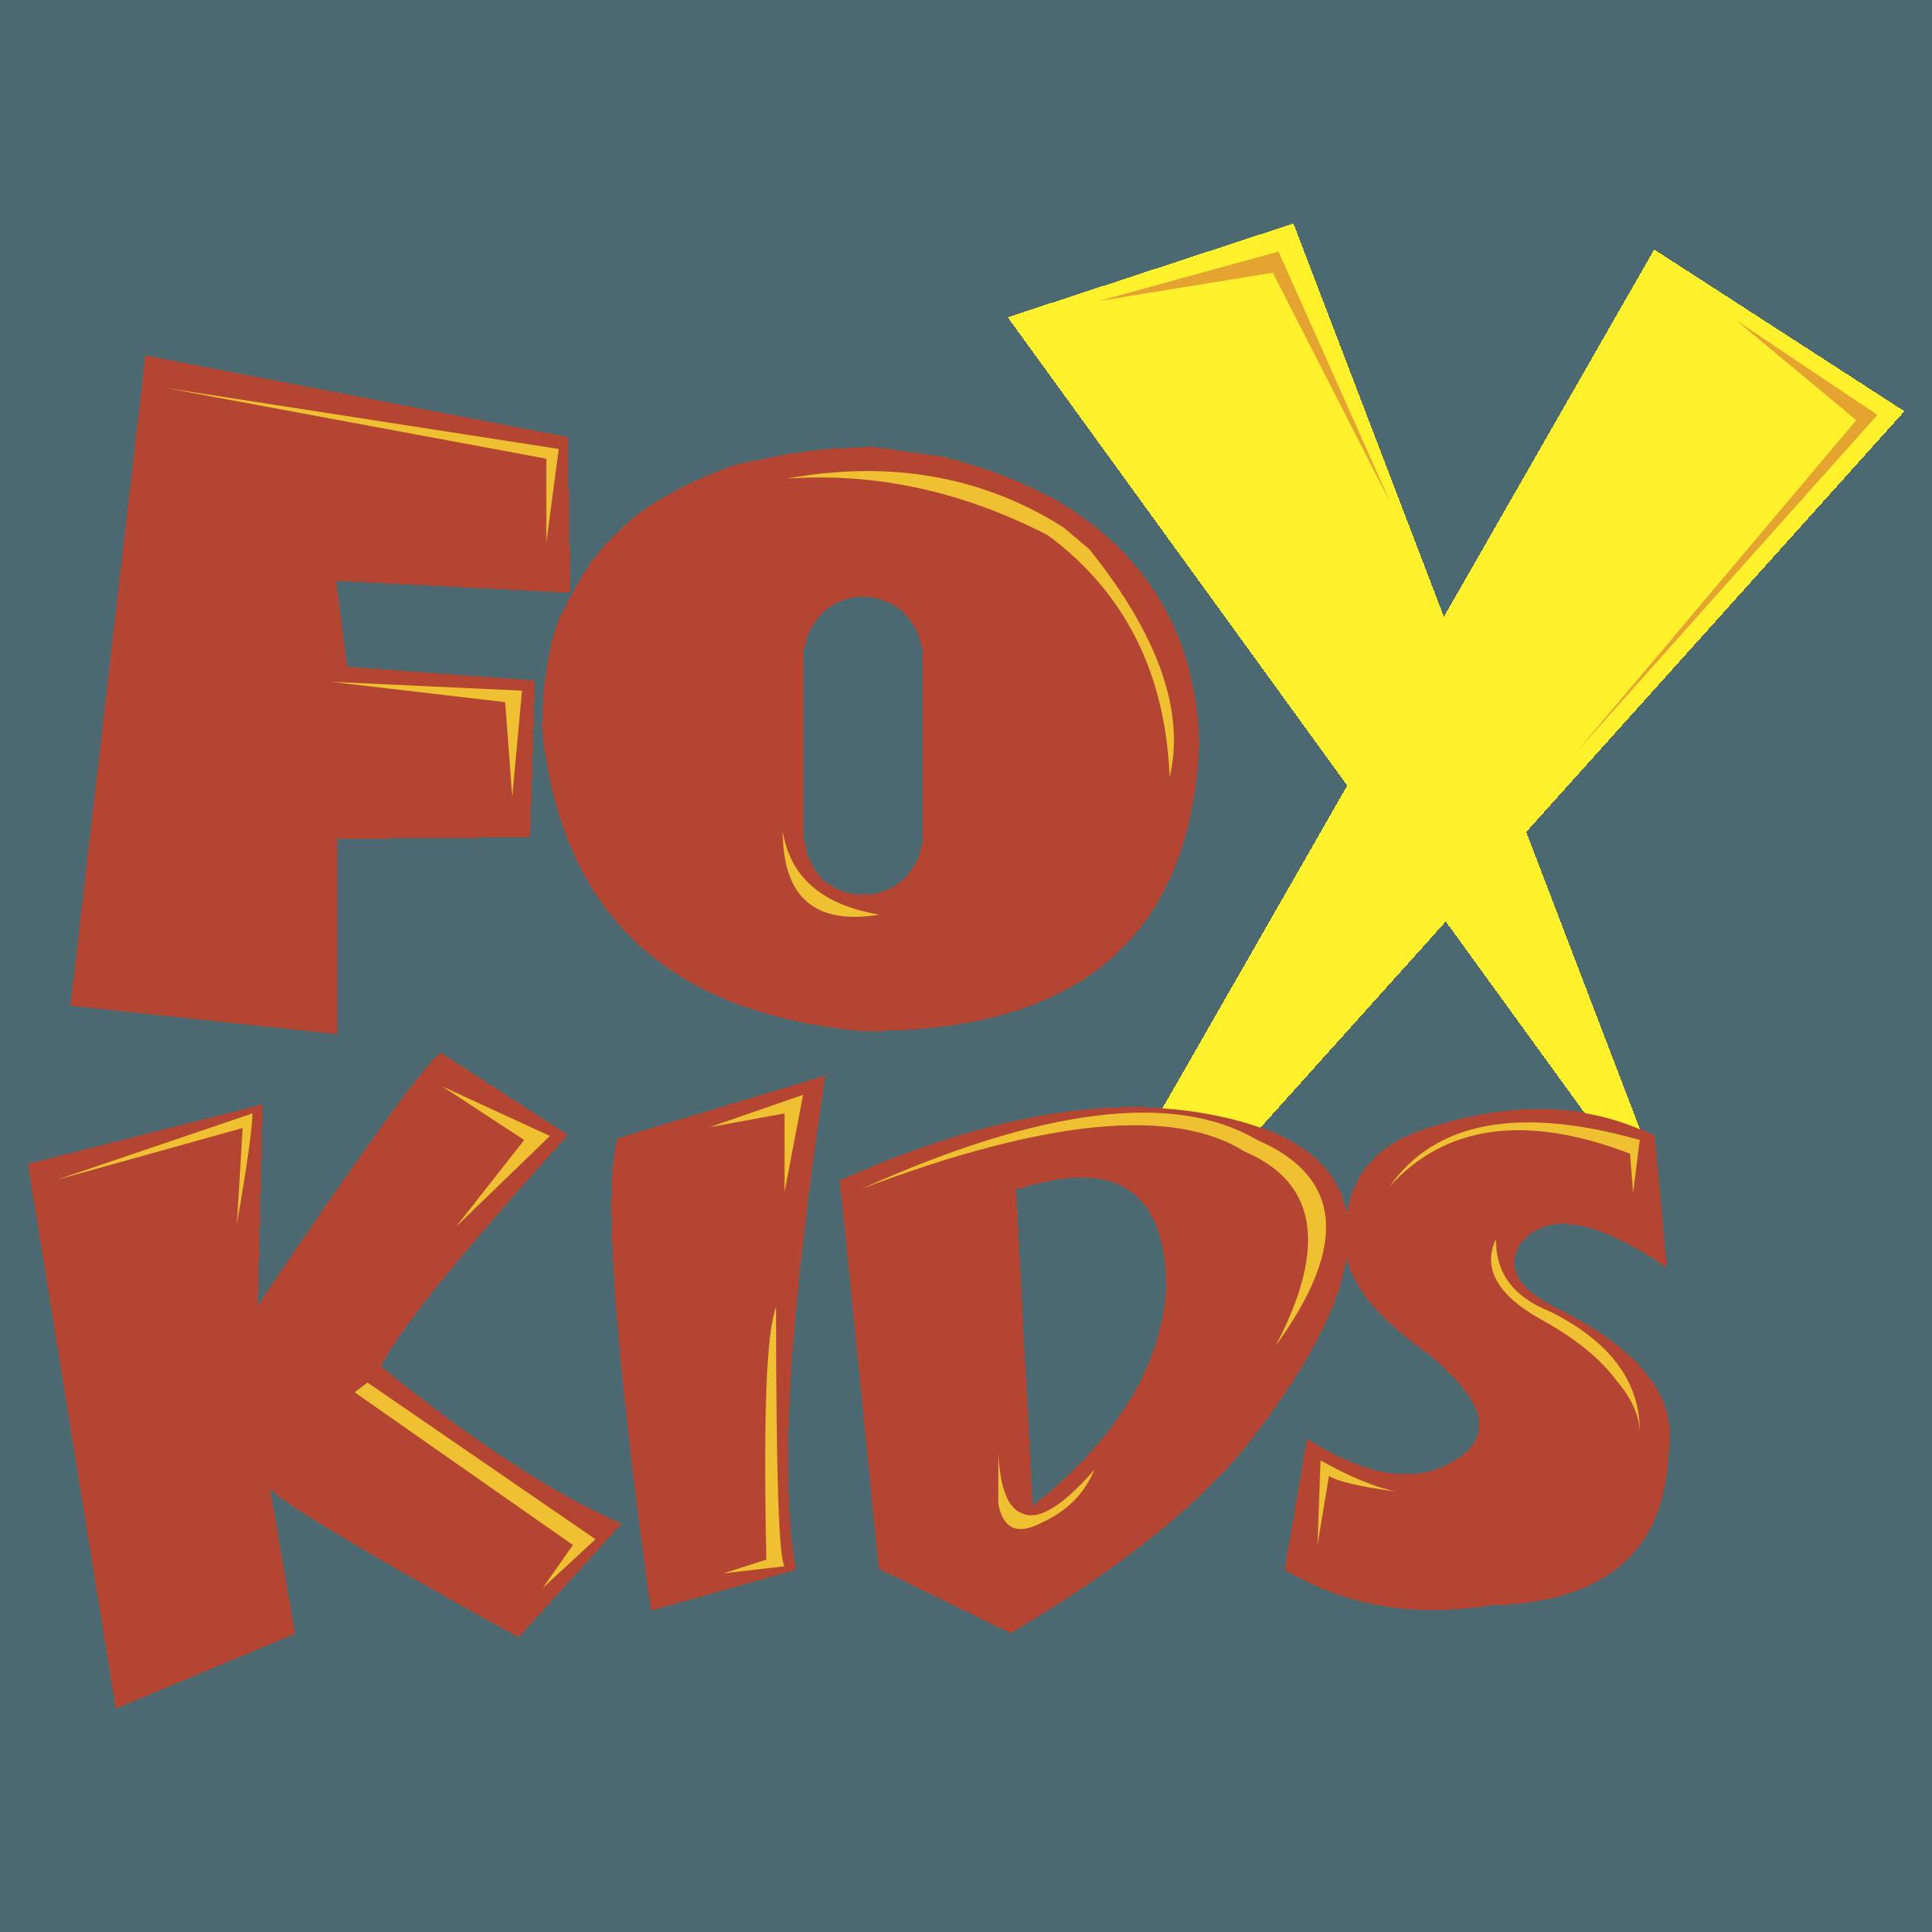 Fox Kids Logo - FoxKids Logo PNG Transparent & SVG ...